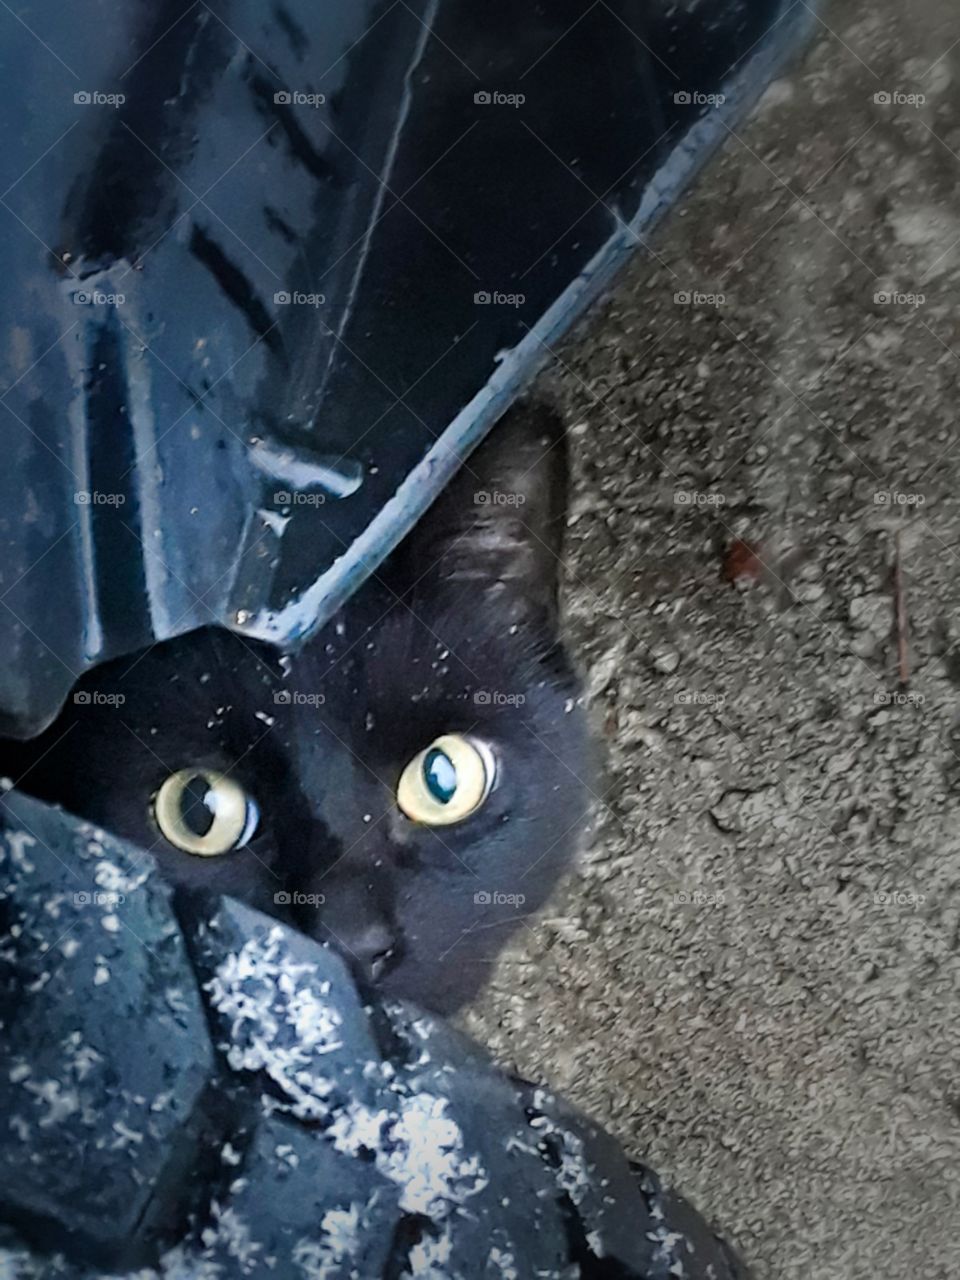 cute black cat